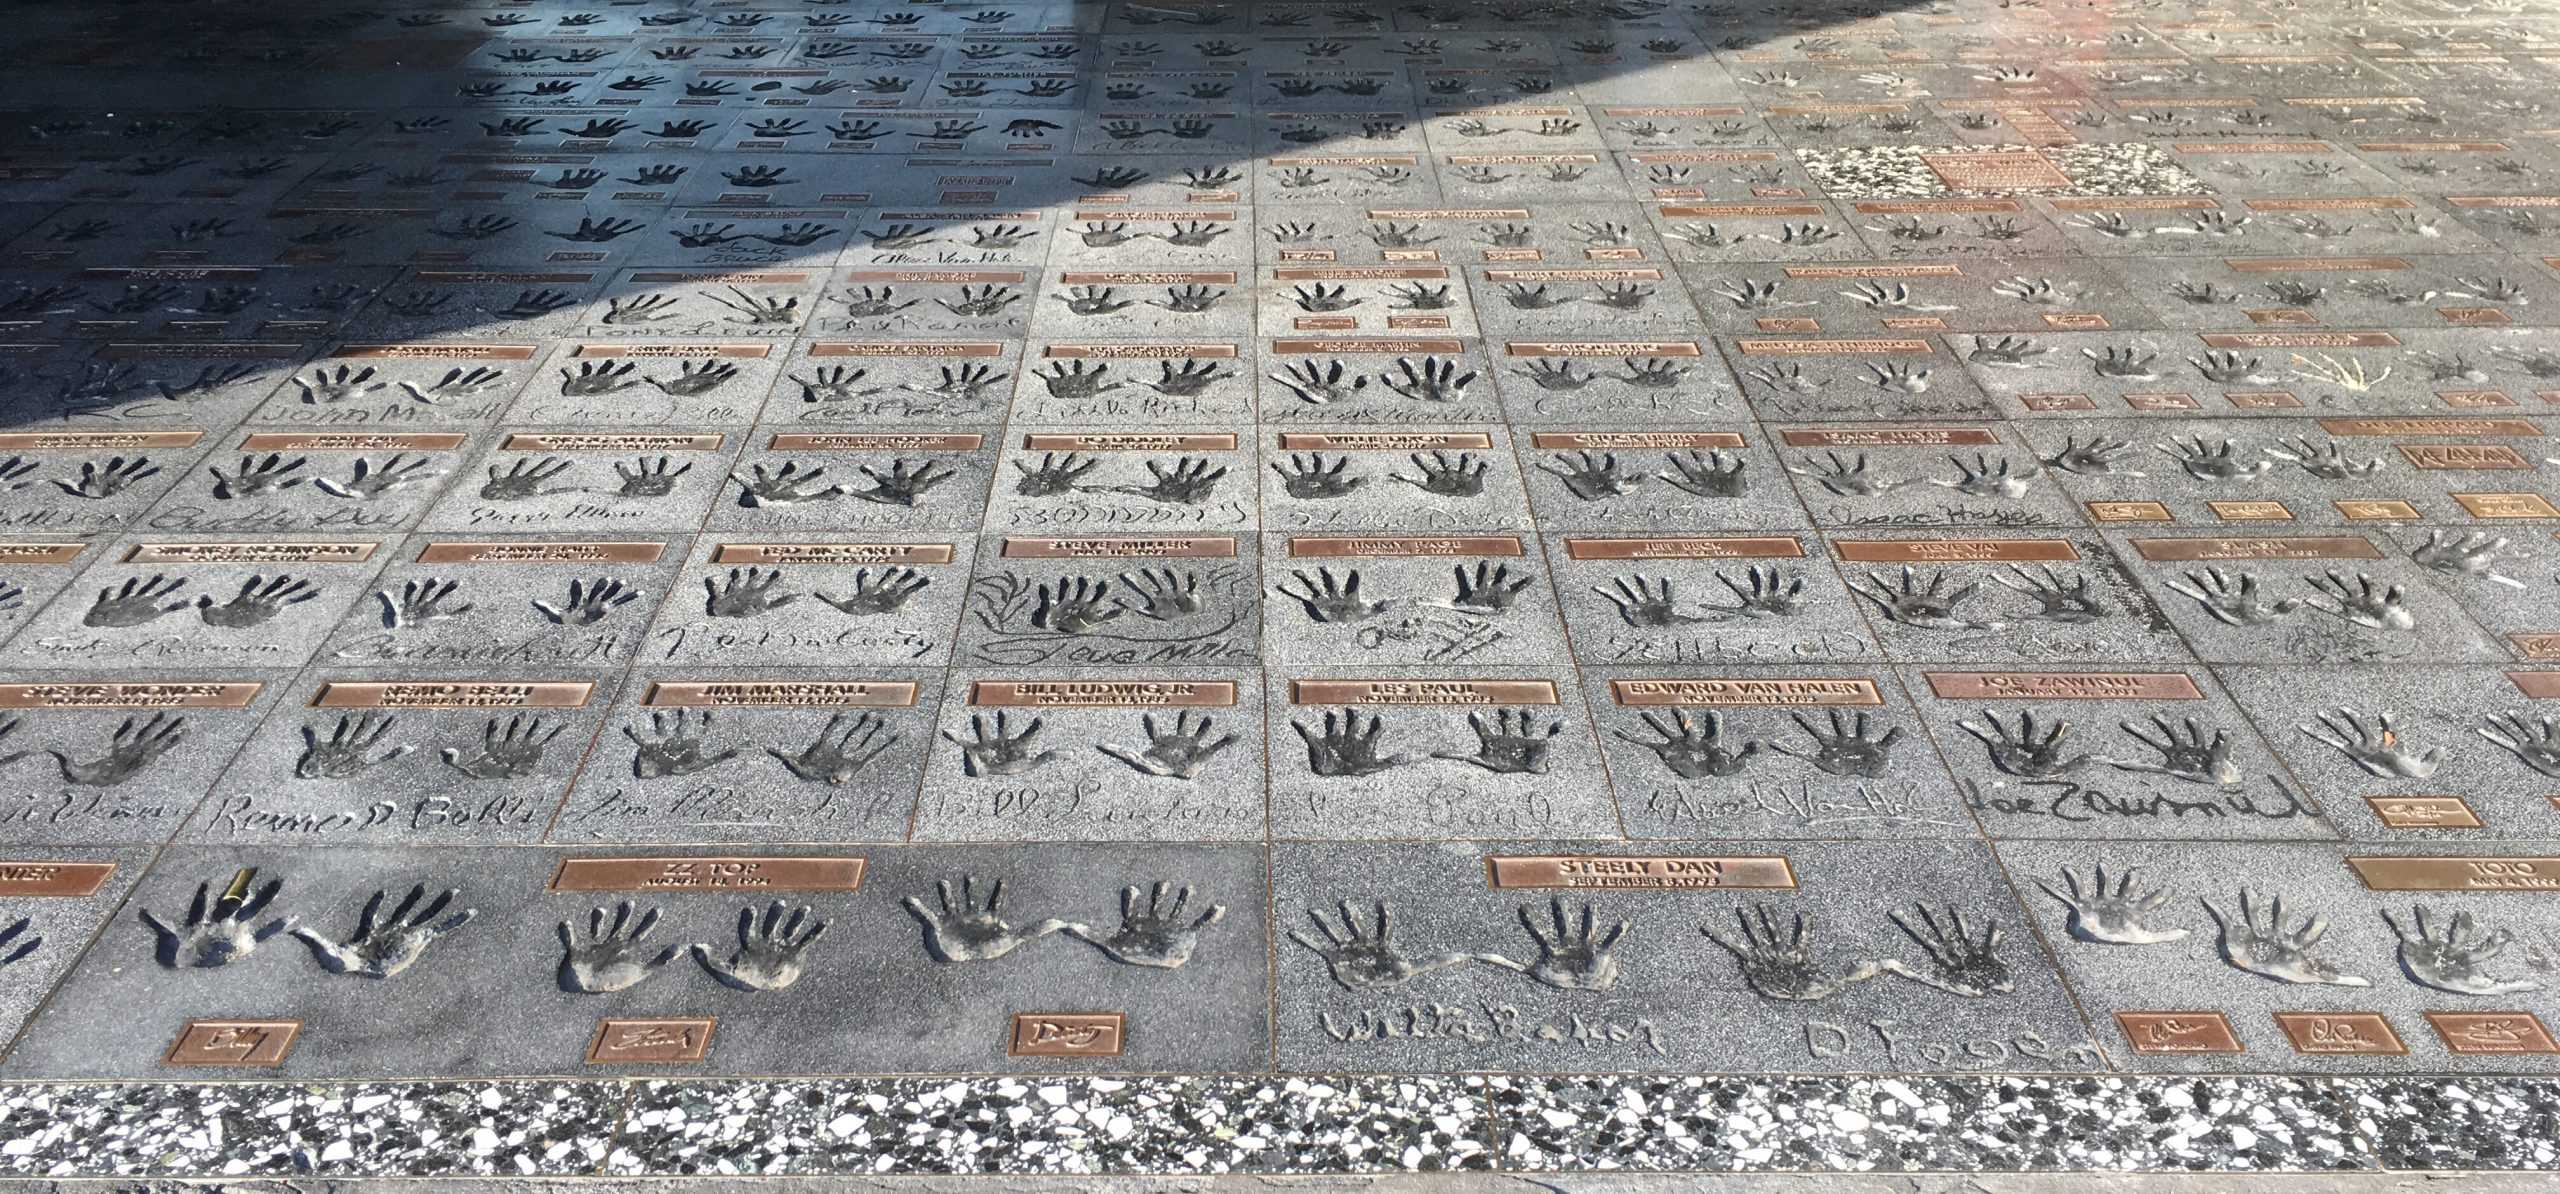 Sidewalk with hand prints